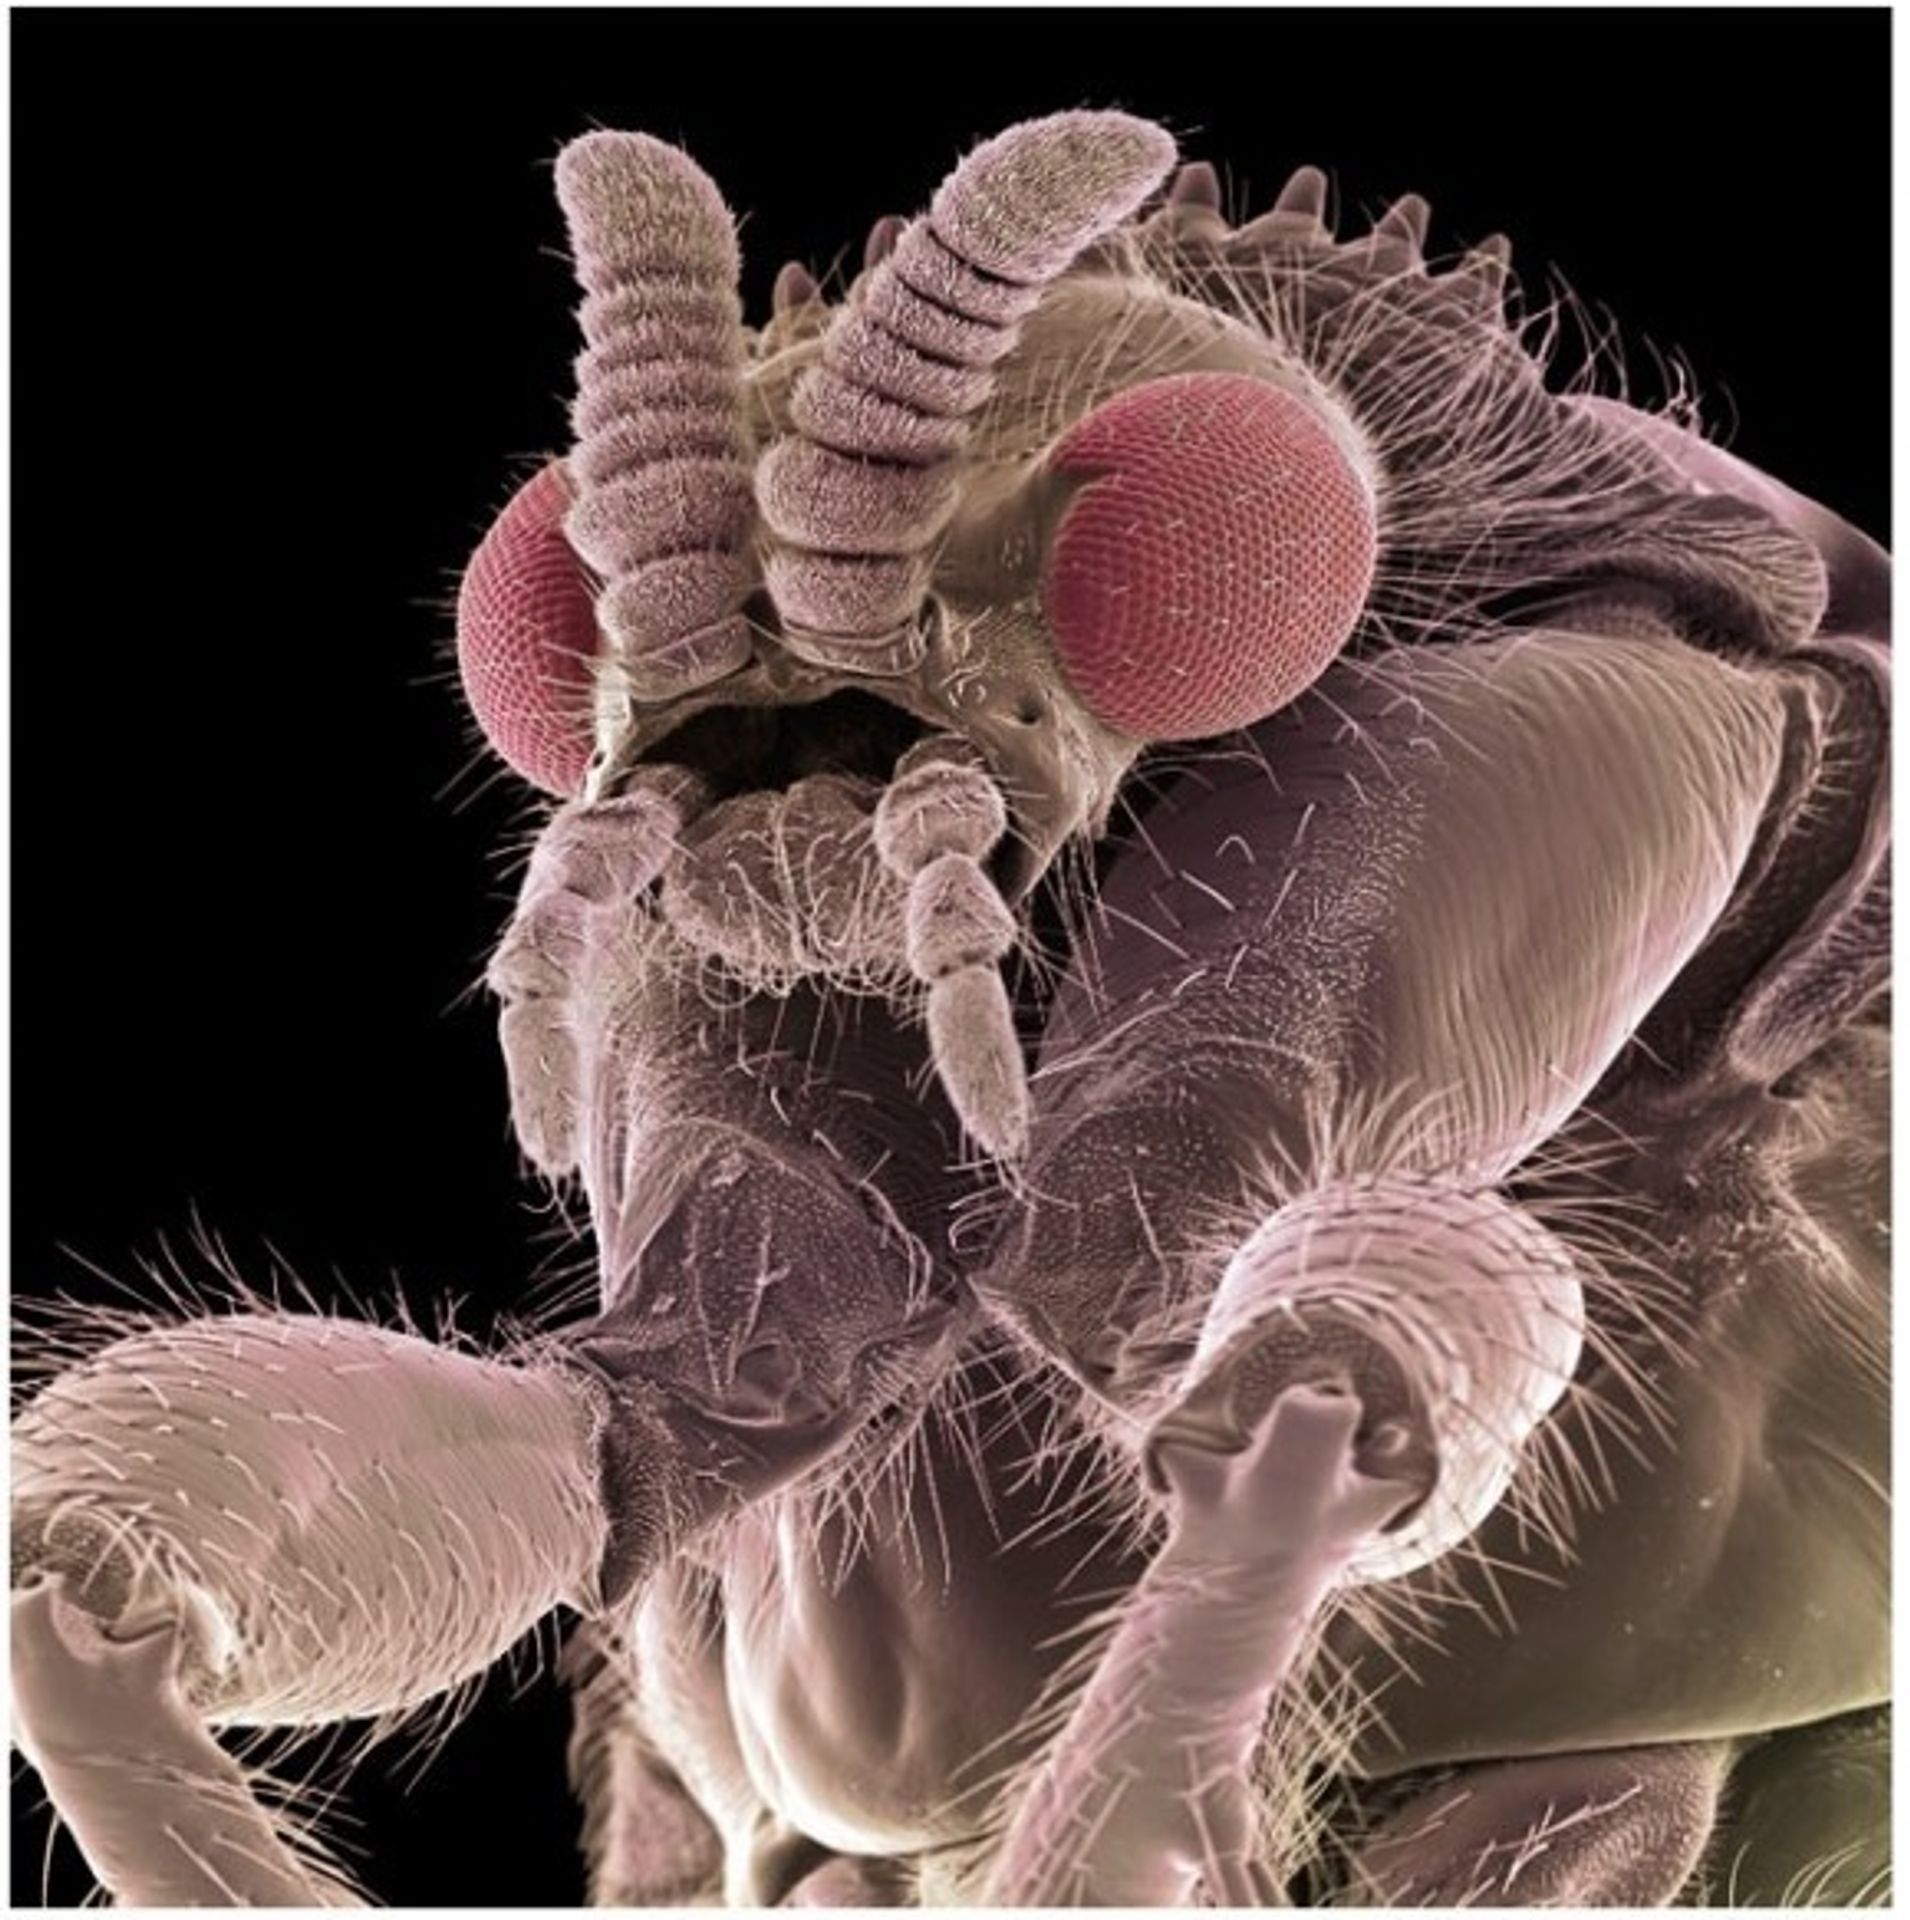 Hmyz pod elektronovým mikroskopem - 17 - GALERIE: Hmyz pod elektronovým mikroskopem (5/20)